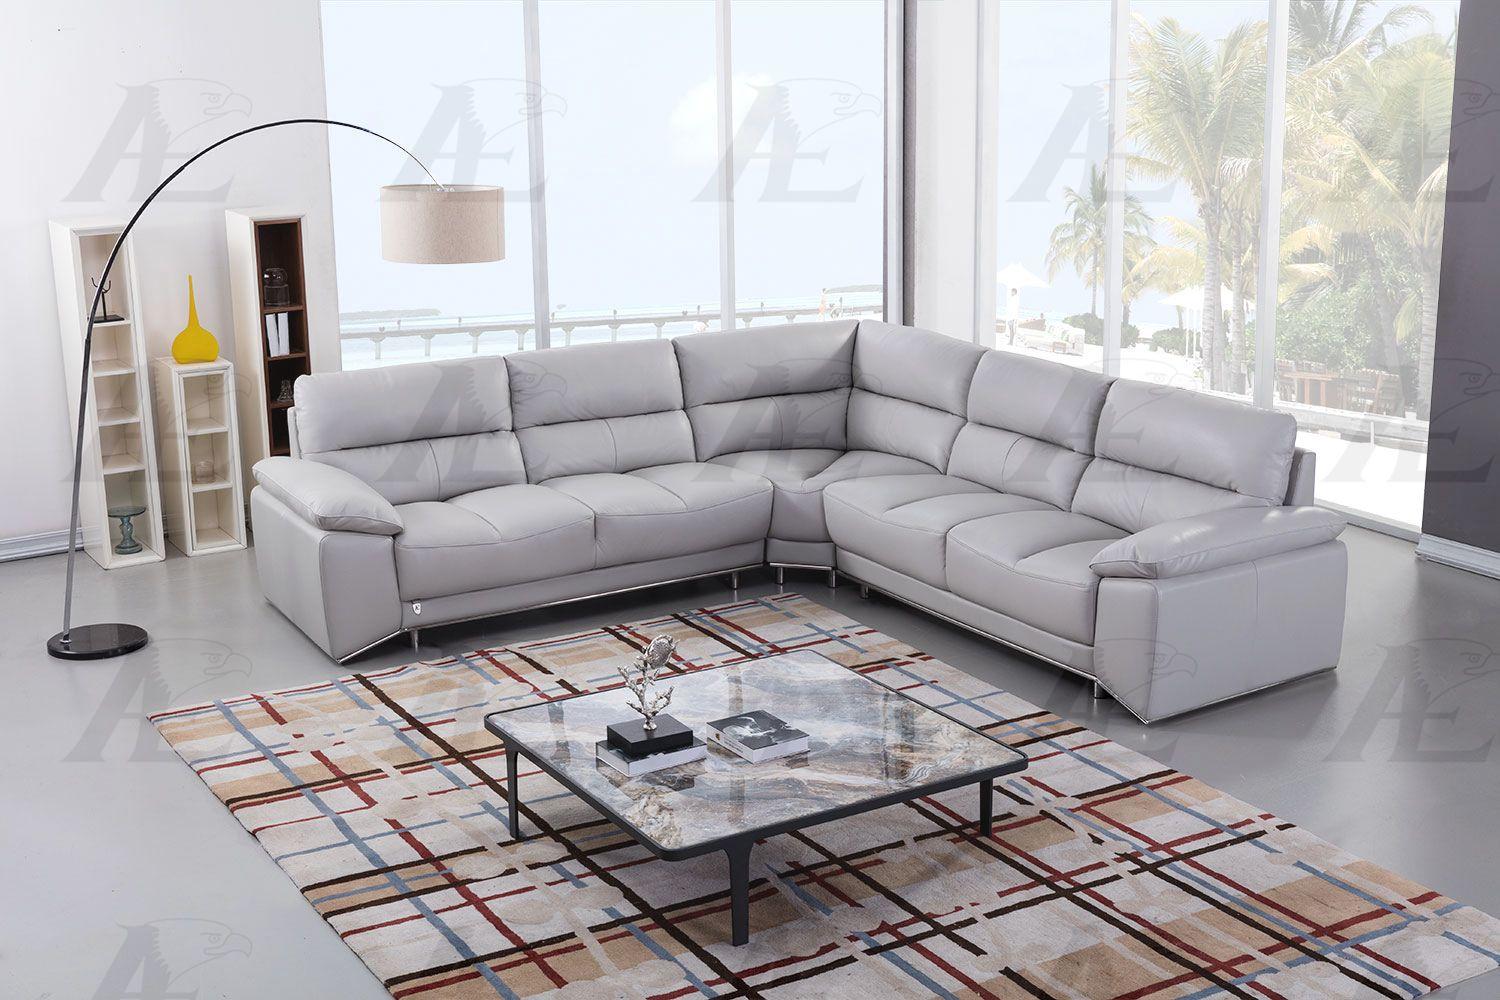 

        
American Eagle Furniture EK-L8000M-LG Sectional Sofa Light Gray Top grain leather 00842295102393
